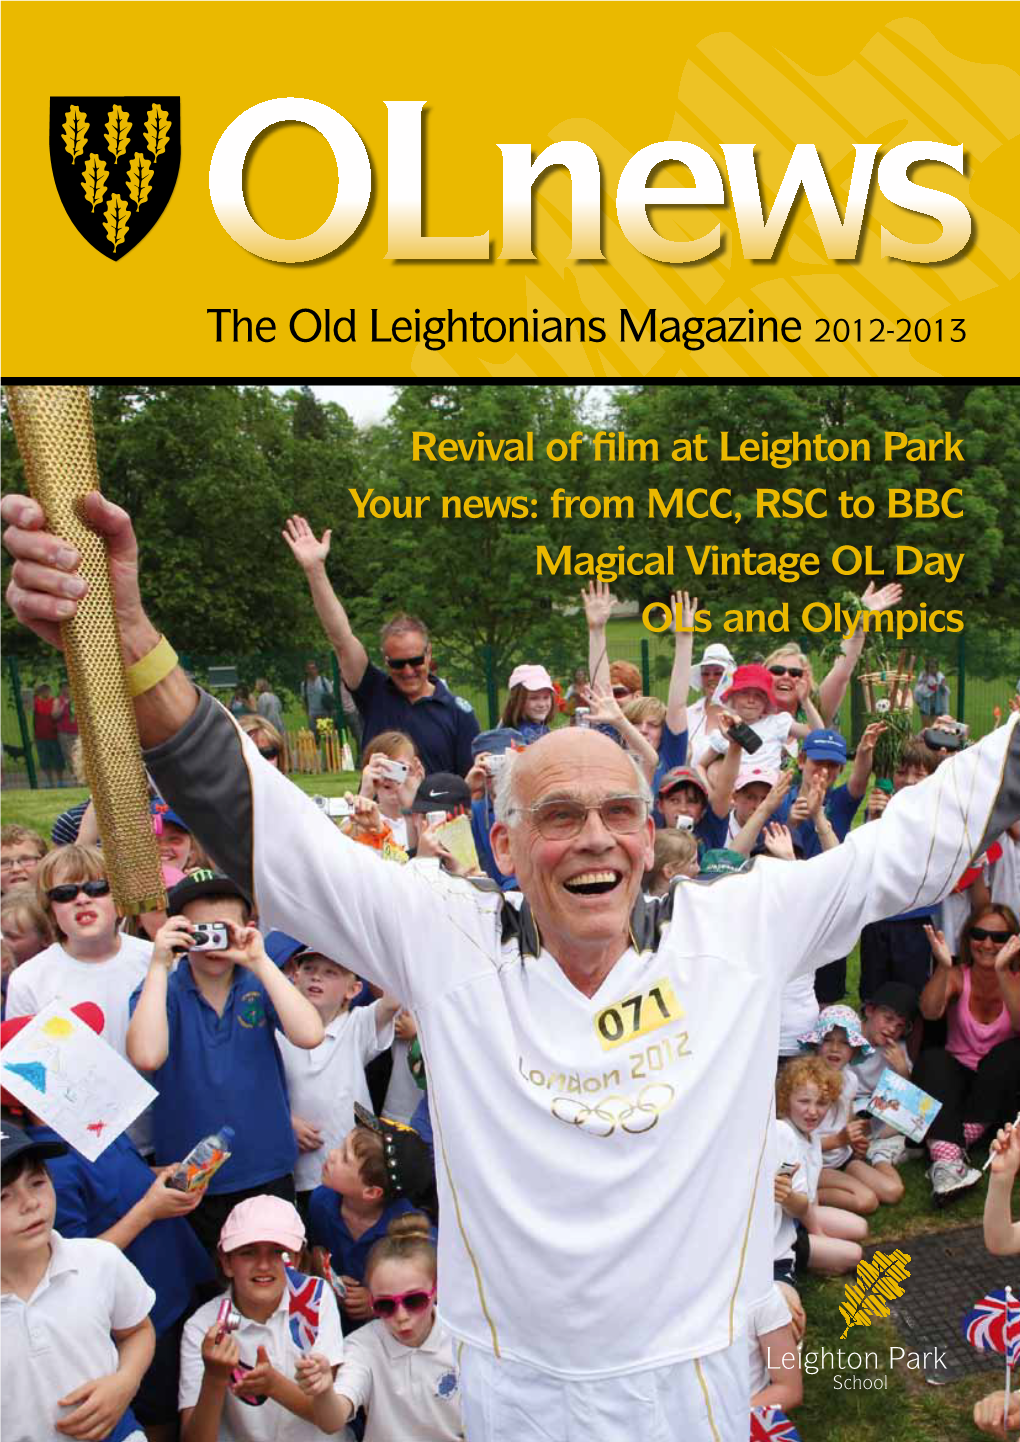 The Old Leightonians Magazine 2012-2013